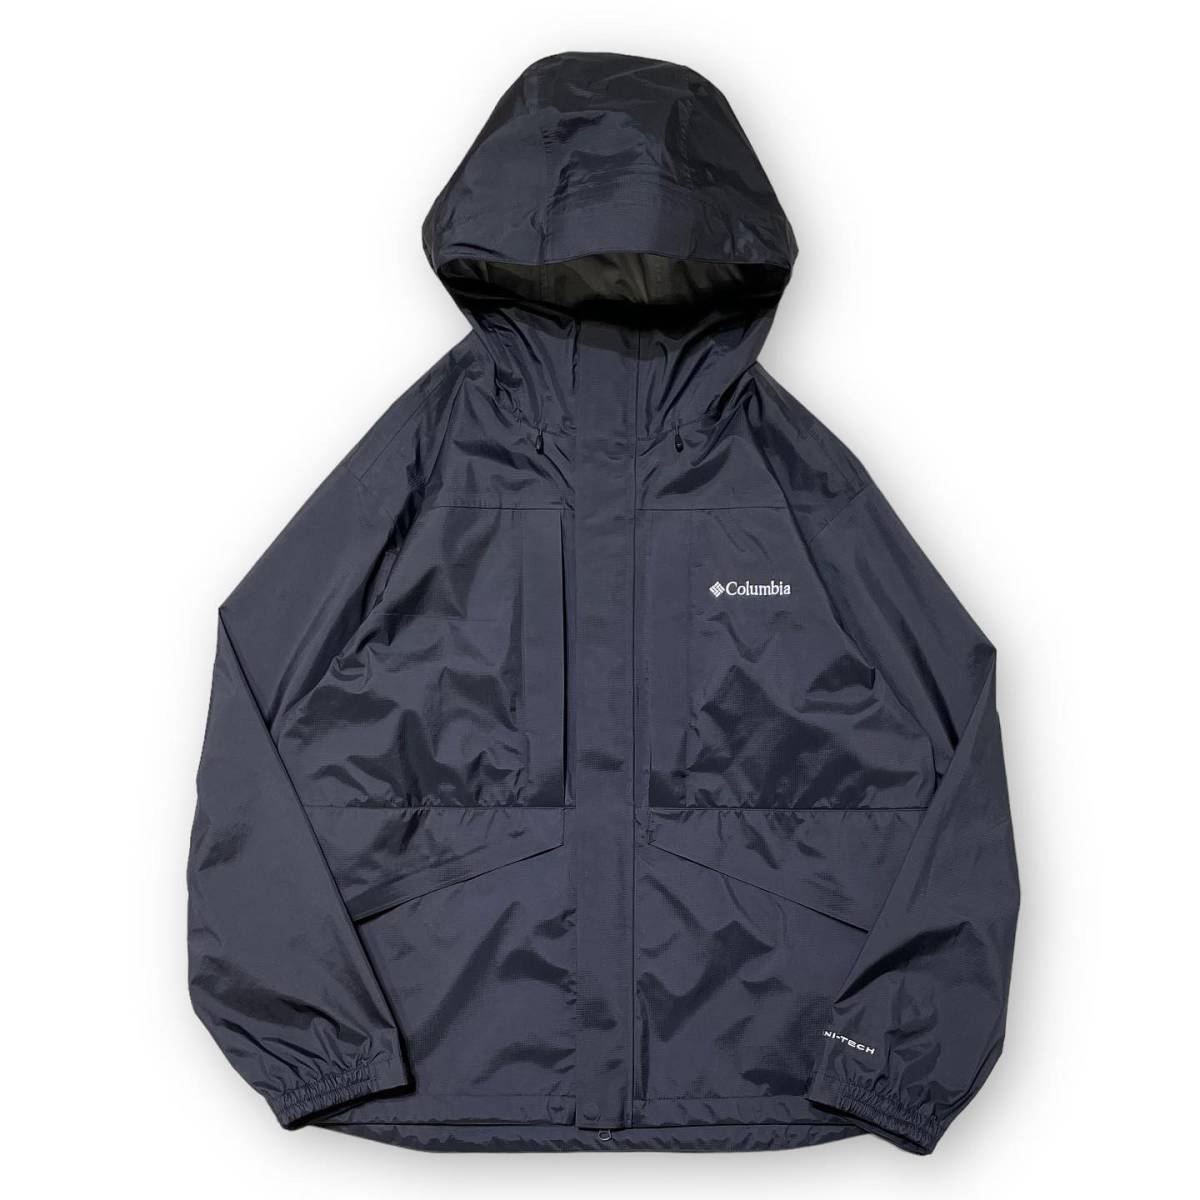 Columbia Mountain jacket Black マウンテンライフパーカー Lサイズ タグ付き コロンビア 店舗受取可